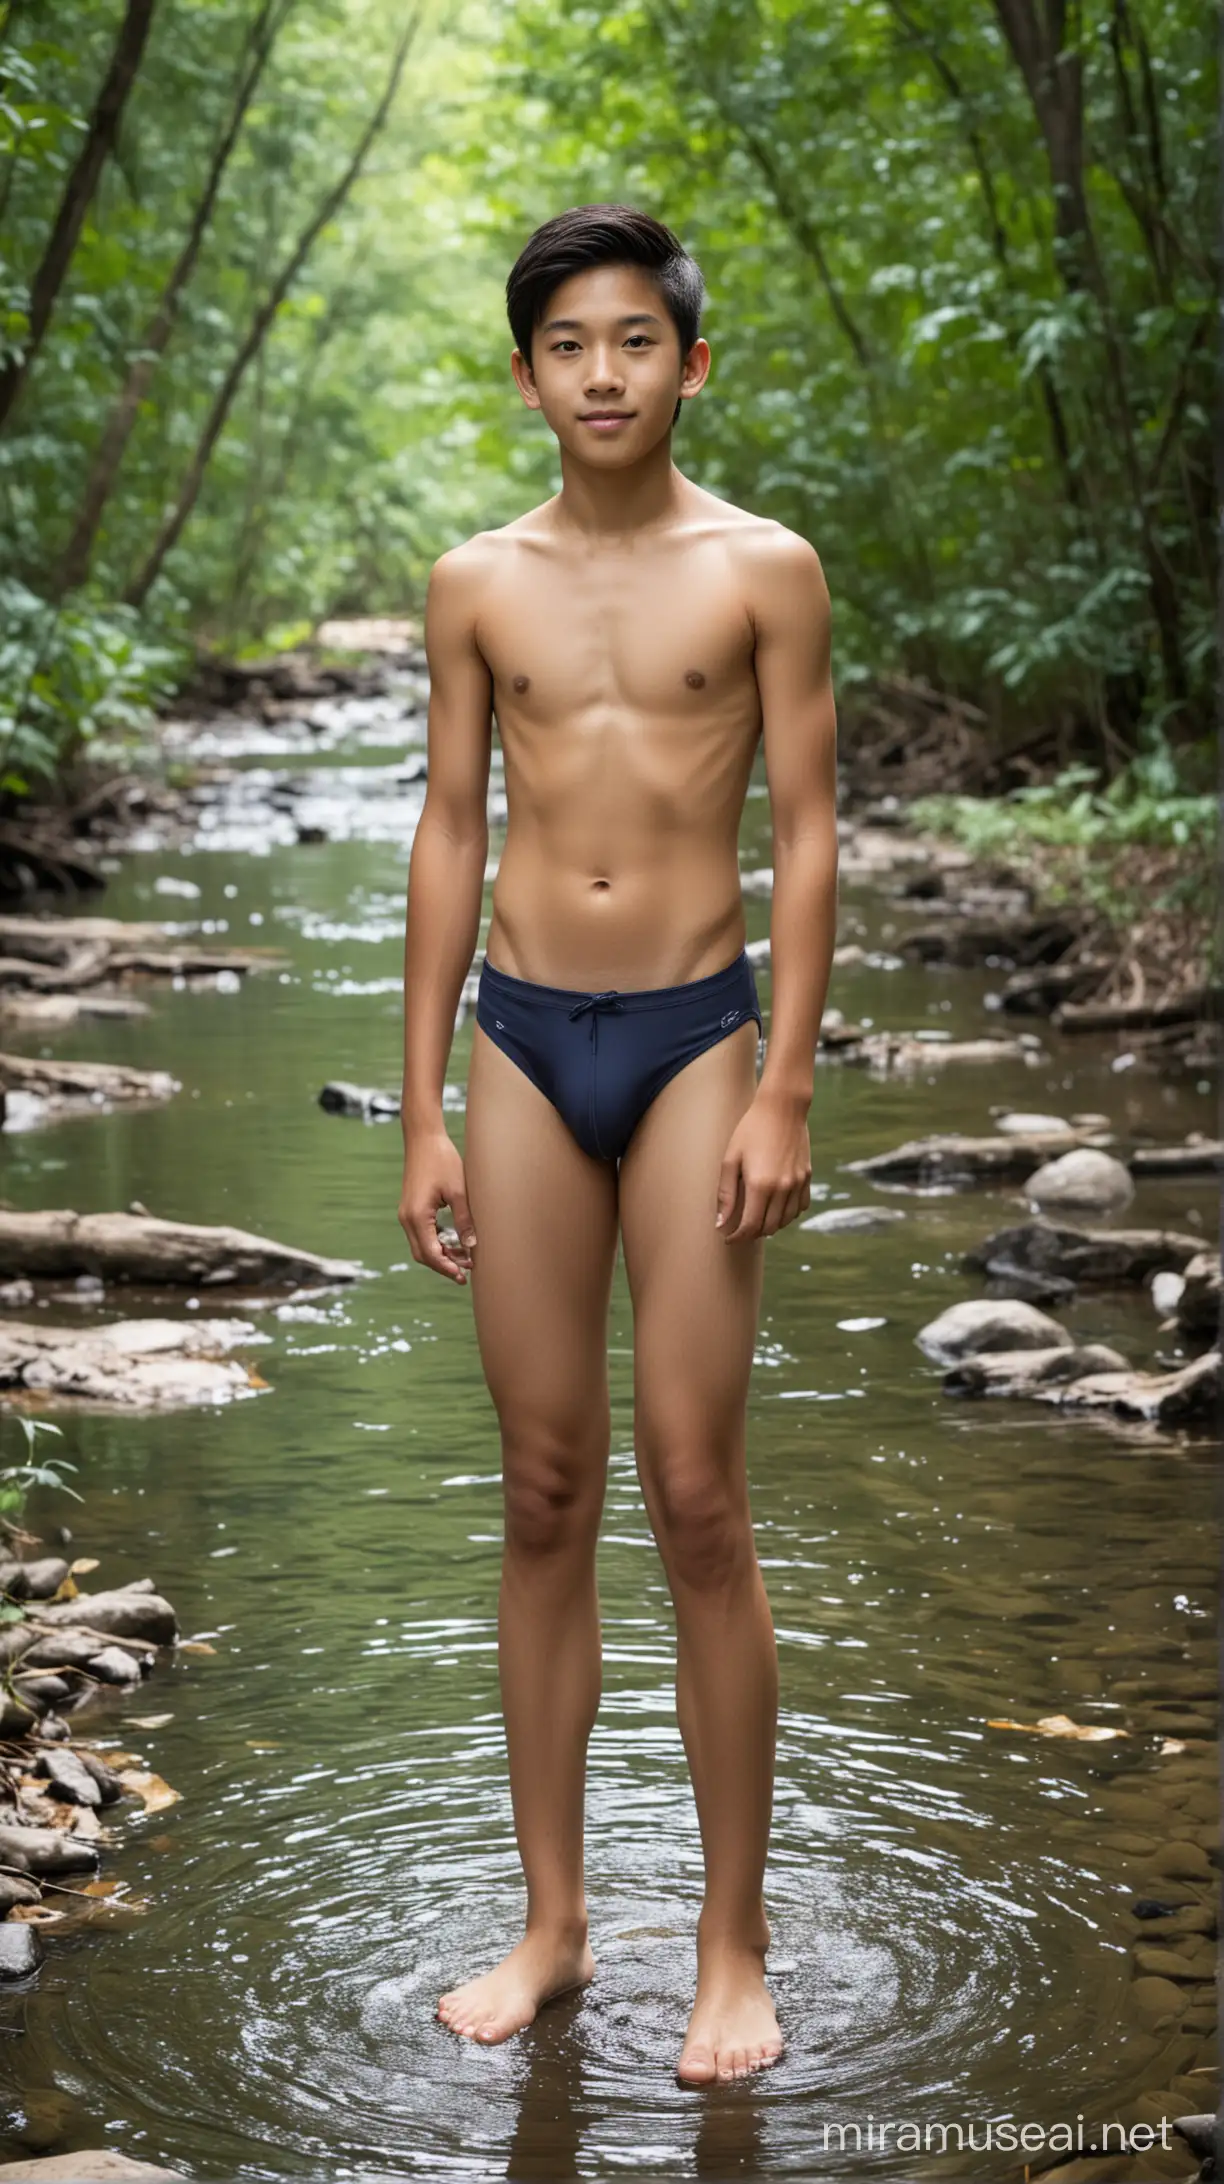 Asian Teenage Boy Standing in Forest Creek